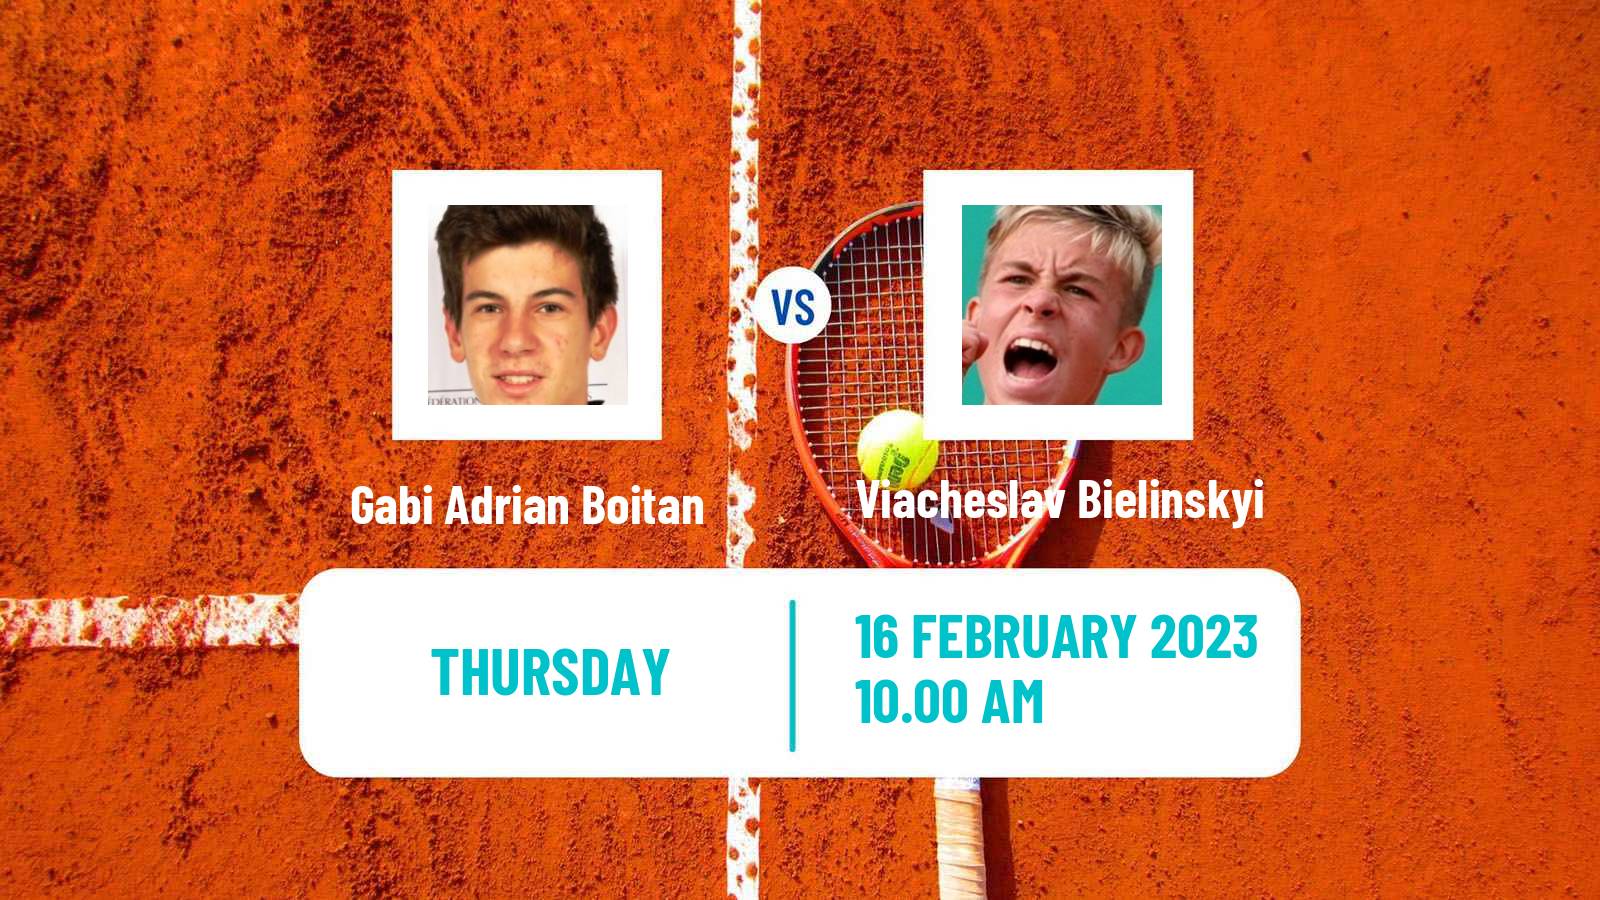 Tennis ITF Tournaments Gabi Adrian Boitan - Viacheslav Bielinskyi